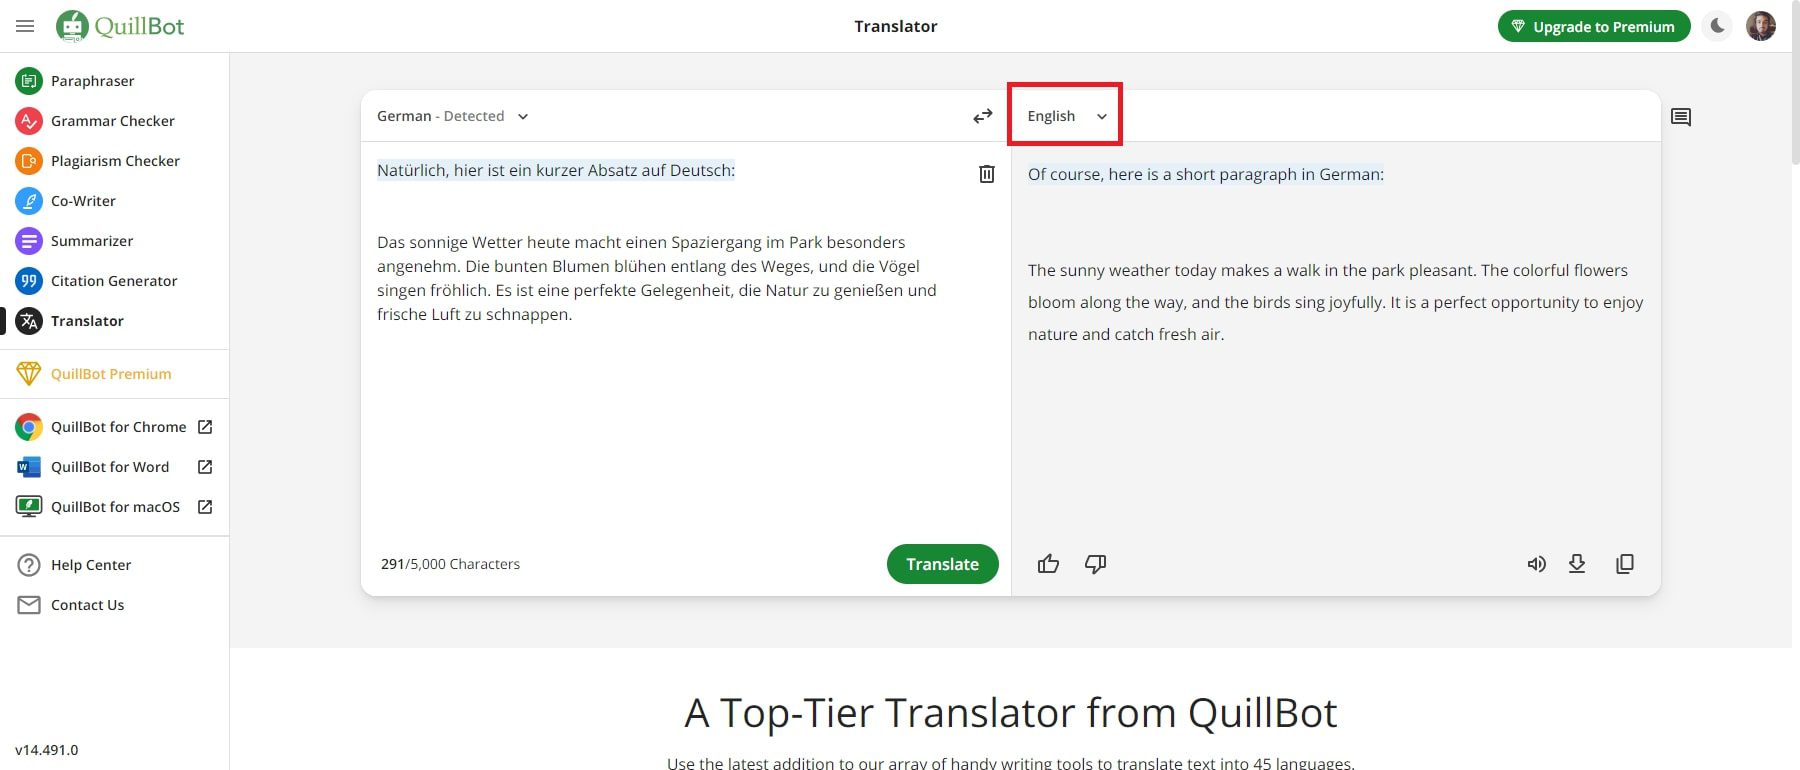 quillbot ai translator content